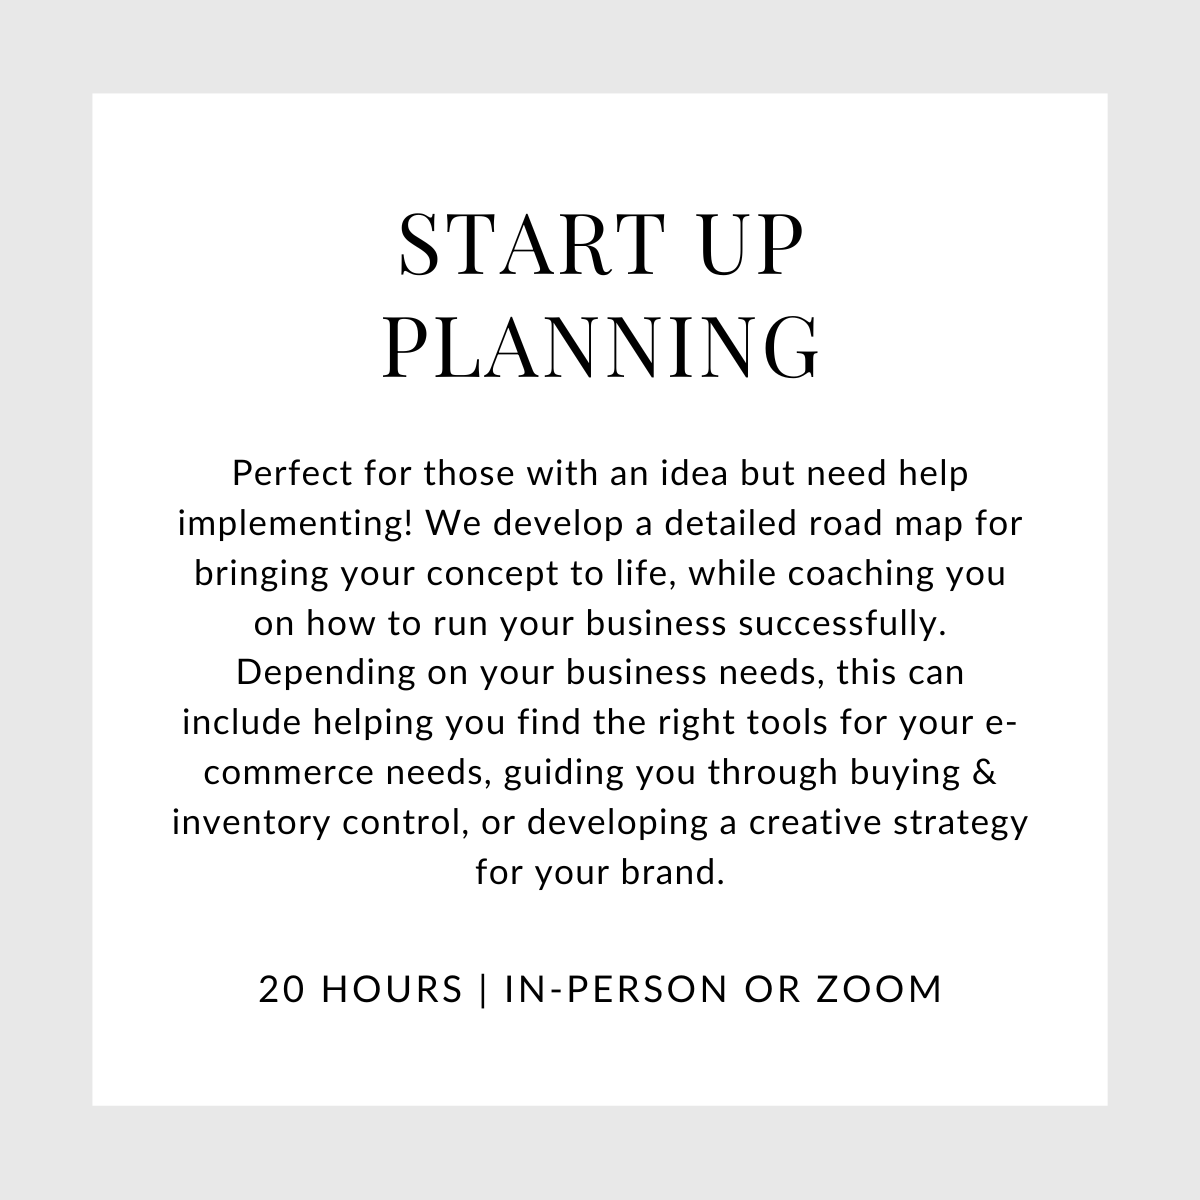 Start Up Planning